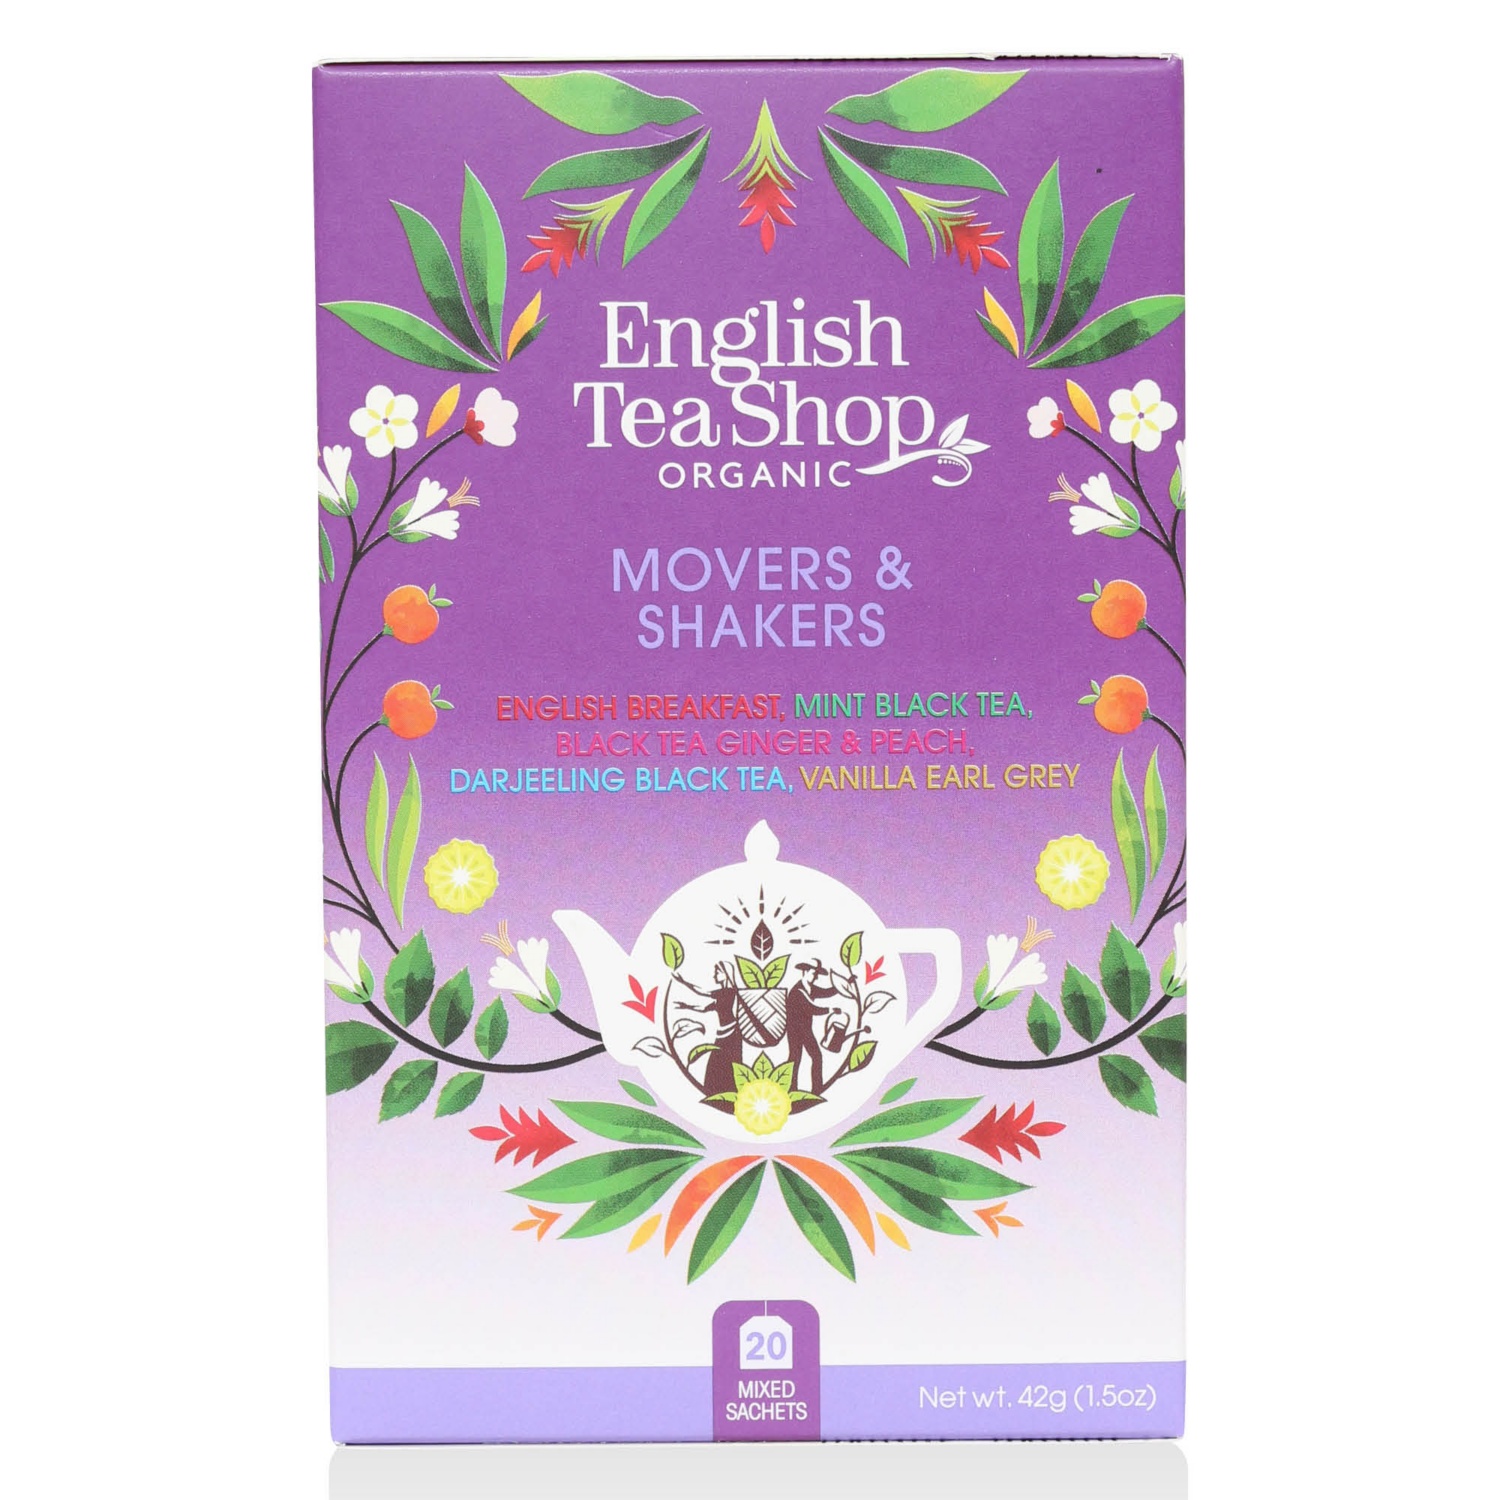 ENGLISH TEA SHOP Bio teaválogatás, Movers & Shakers